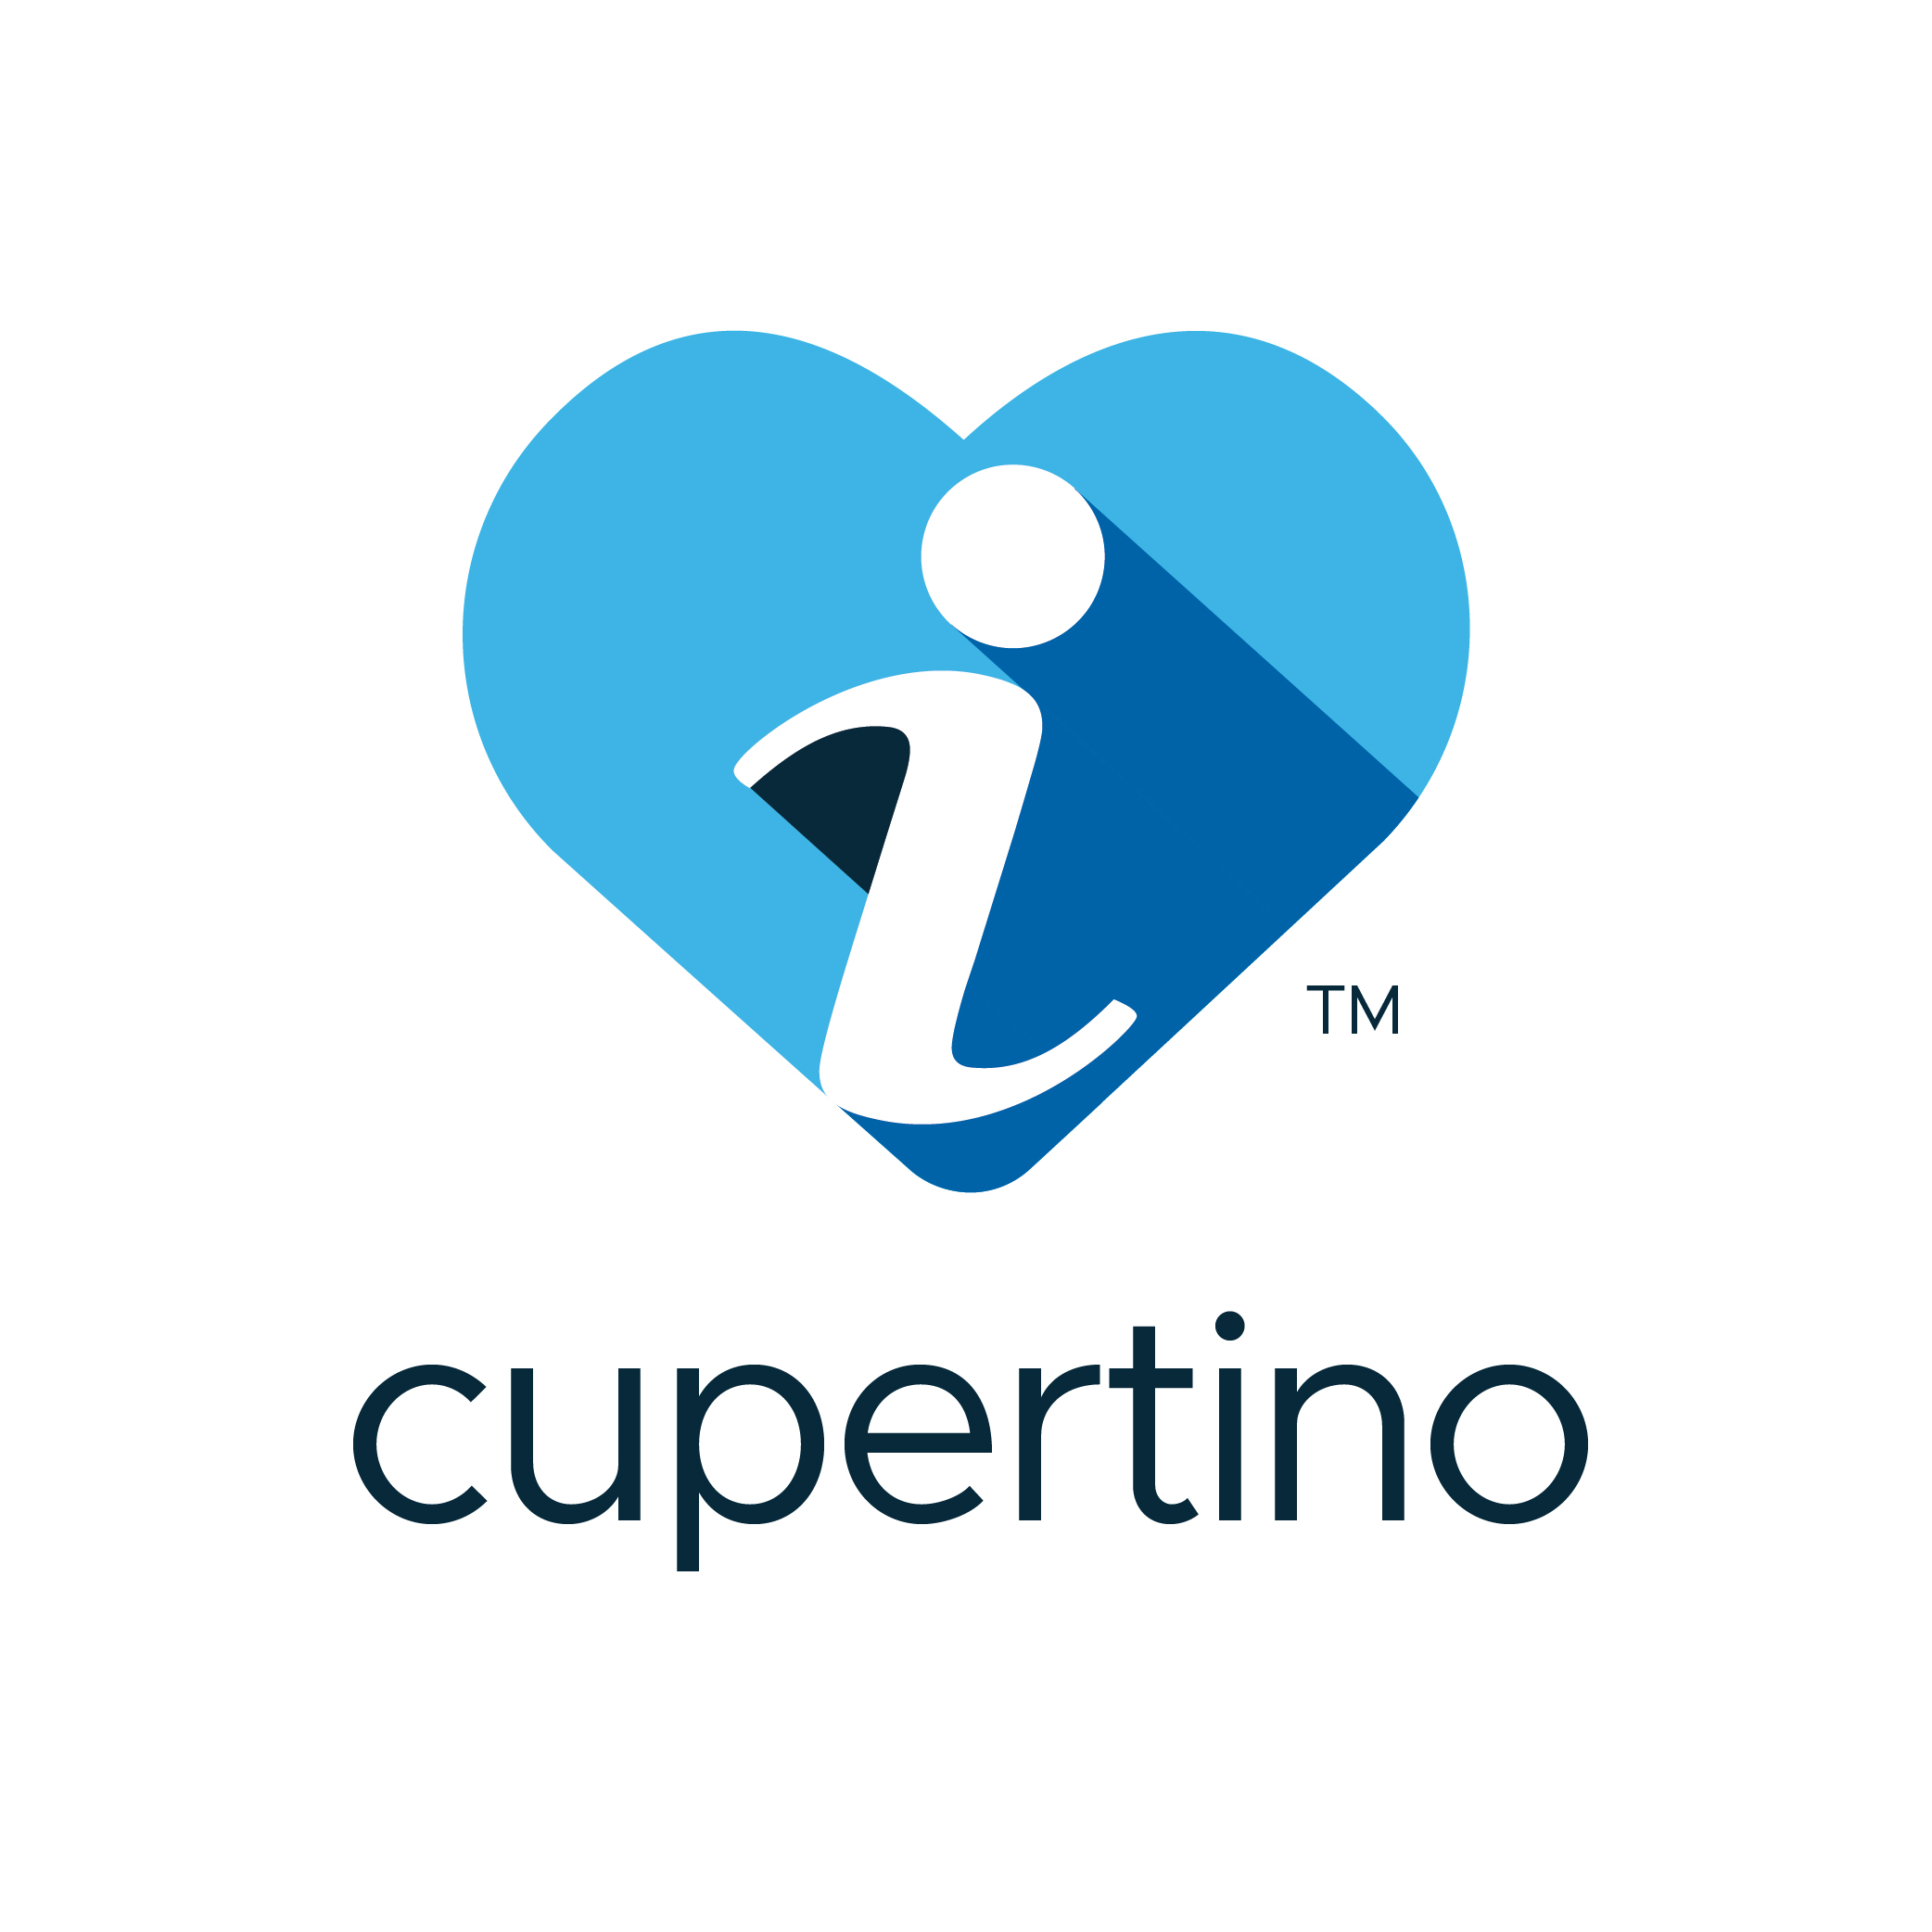 I Love Cupertino logo